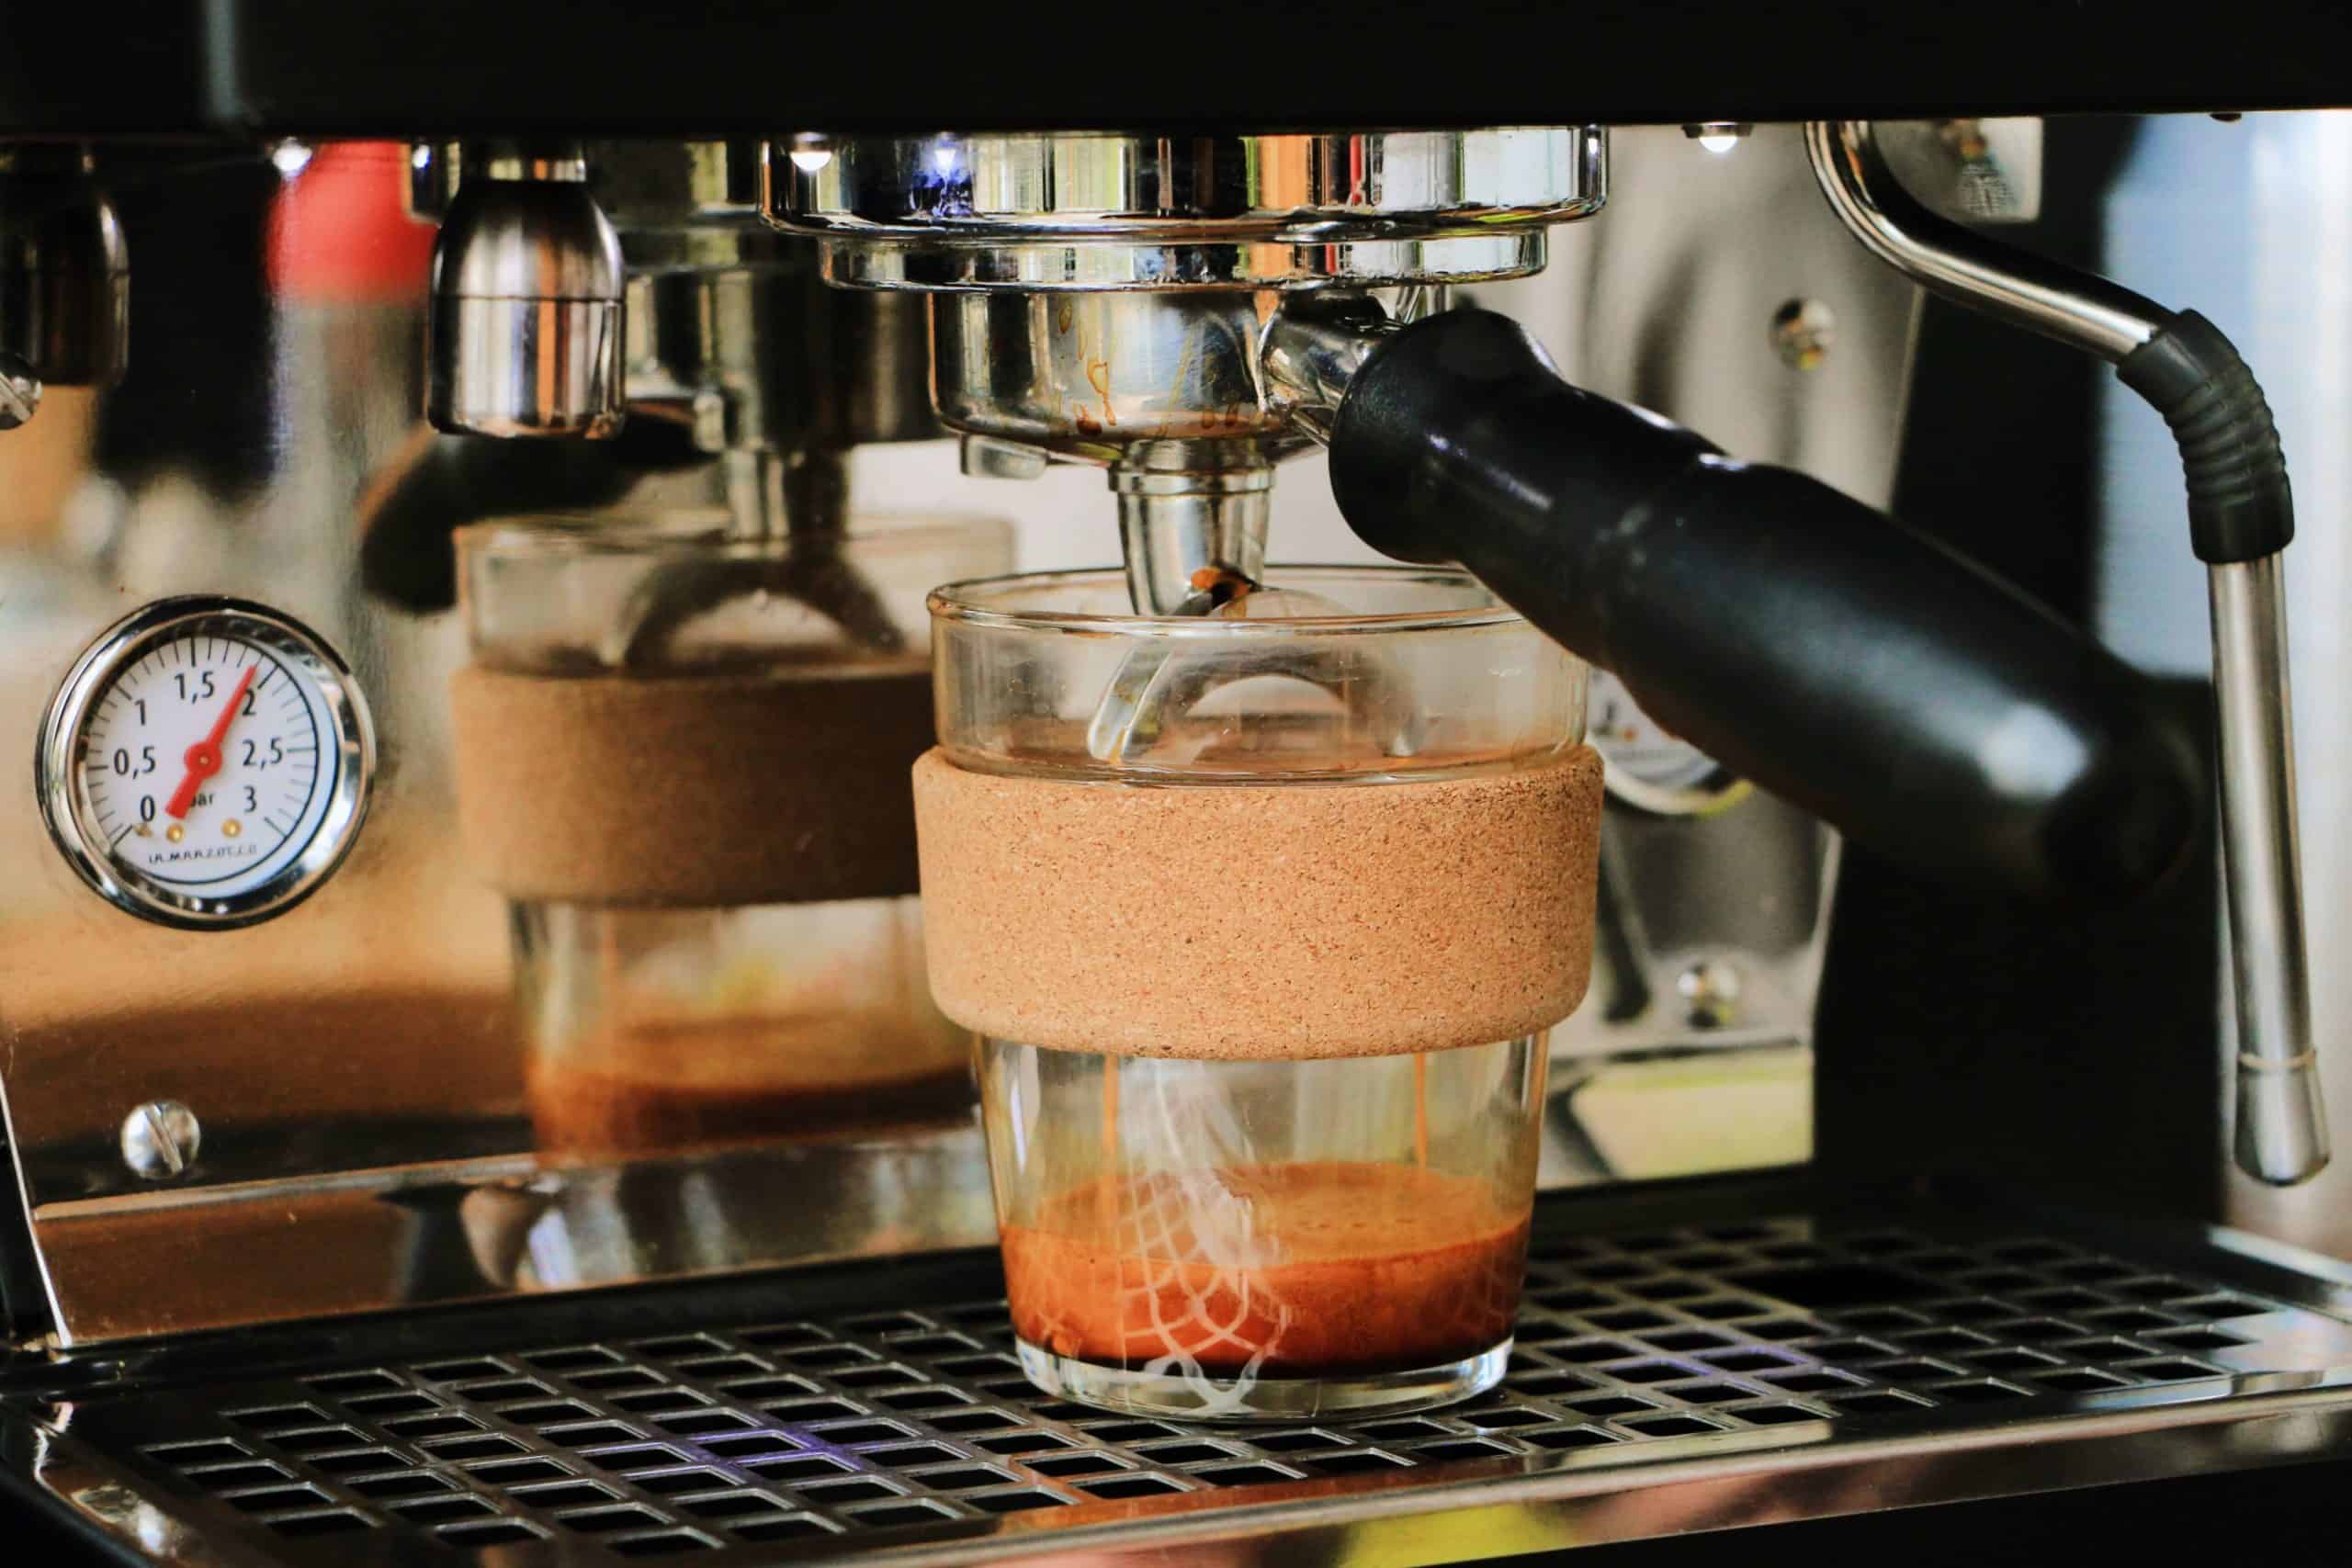 lavish nespresso coffee machine luxury wedding gift ideas